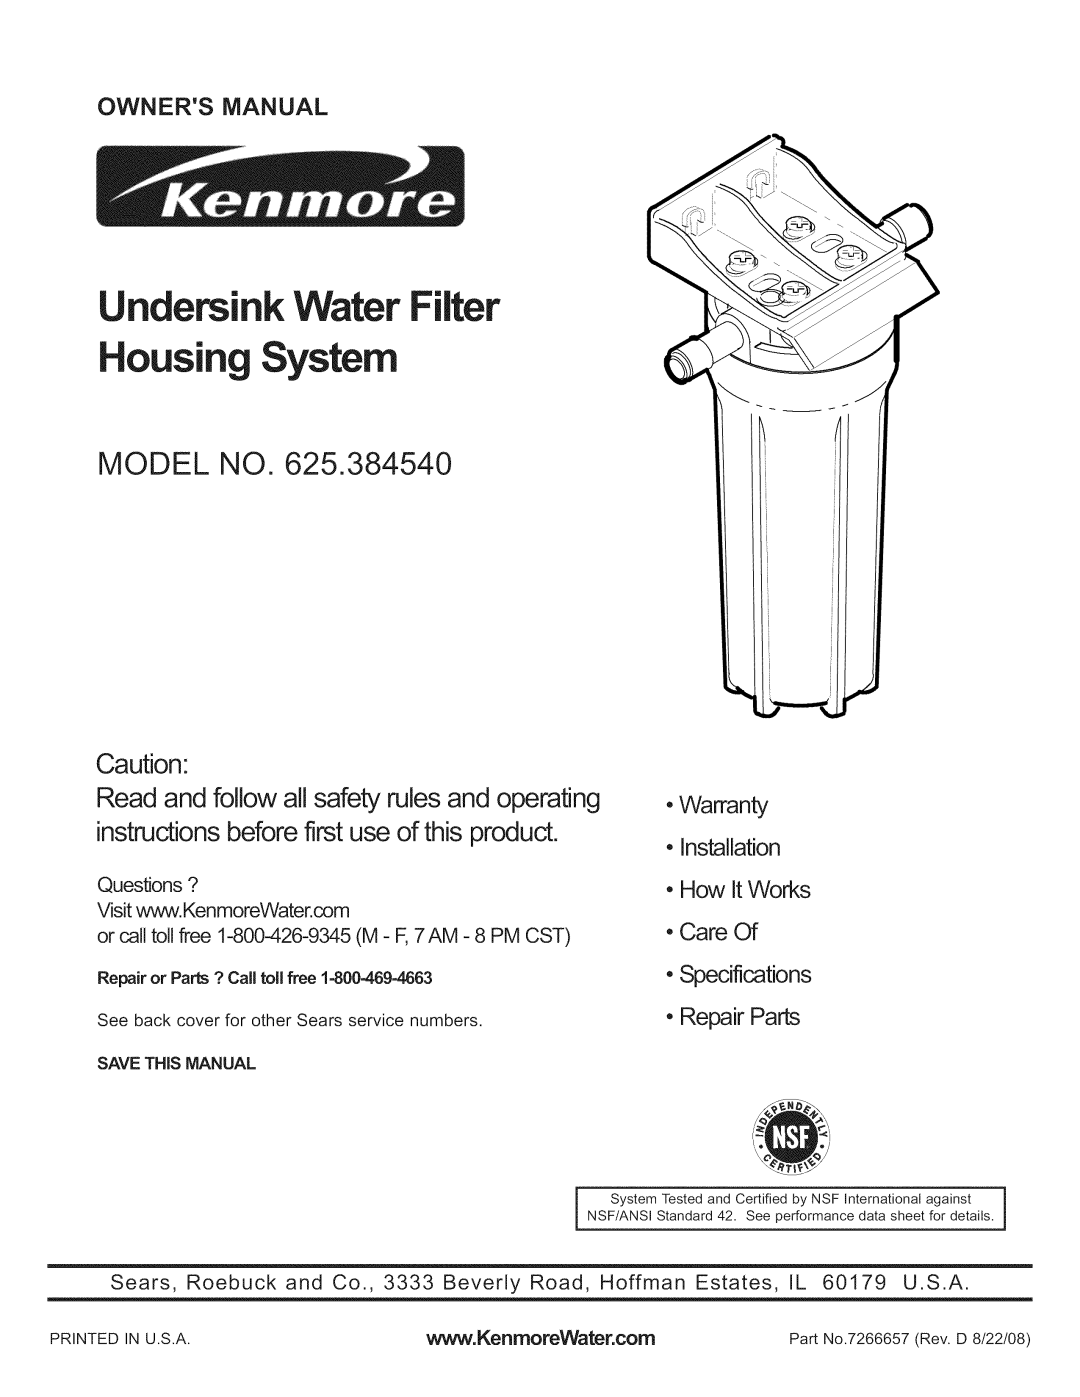 Kenmore 625.38454 owner manual Undersink r Filter, Housing System, Model No, Part No.7266657 Rev. D 8/22/08 